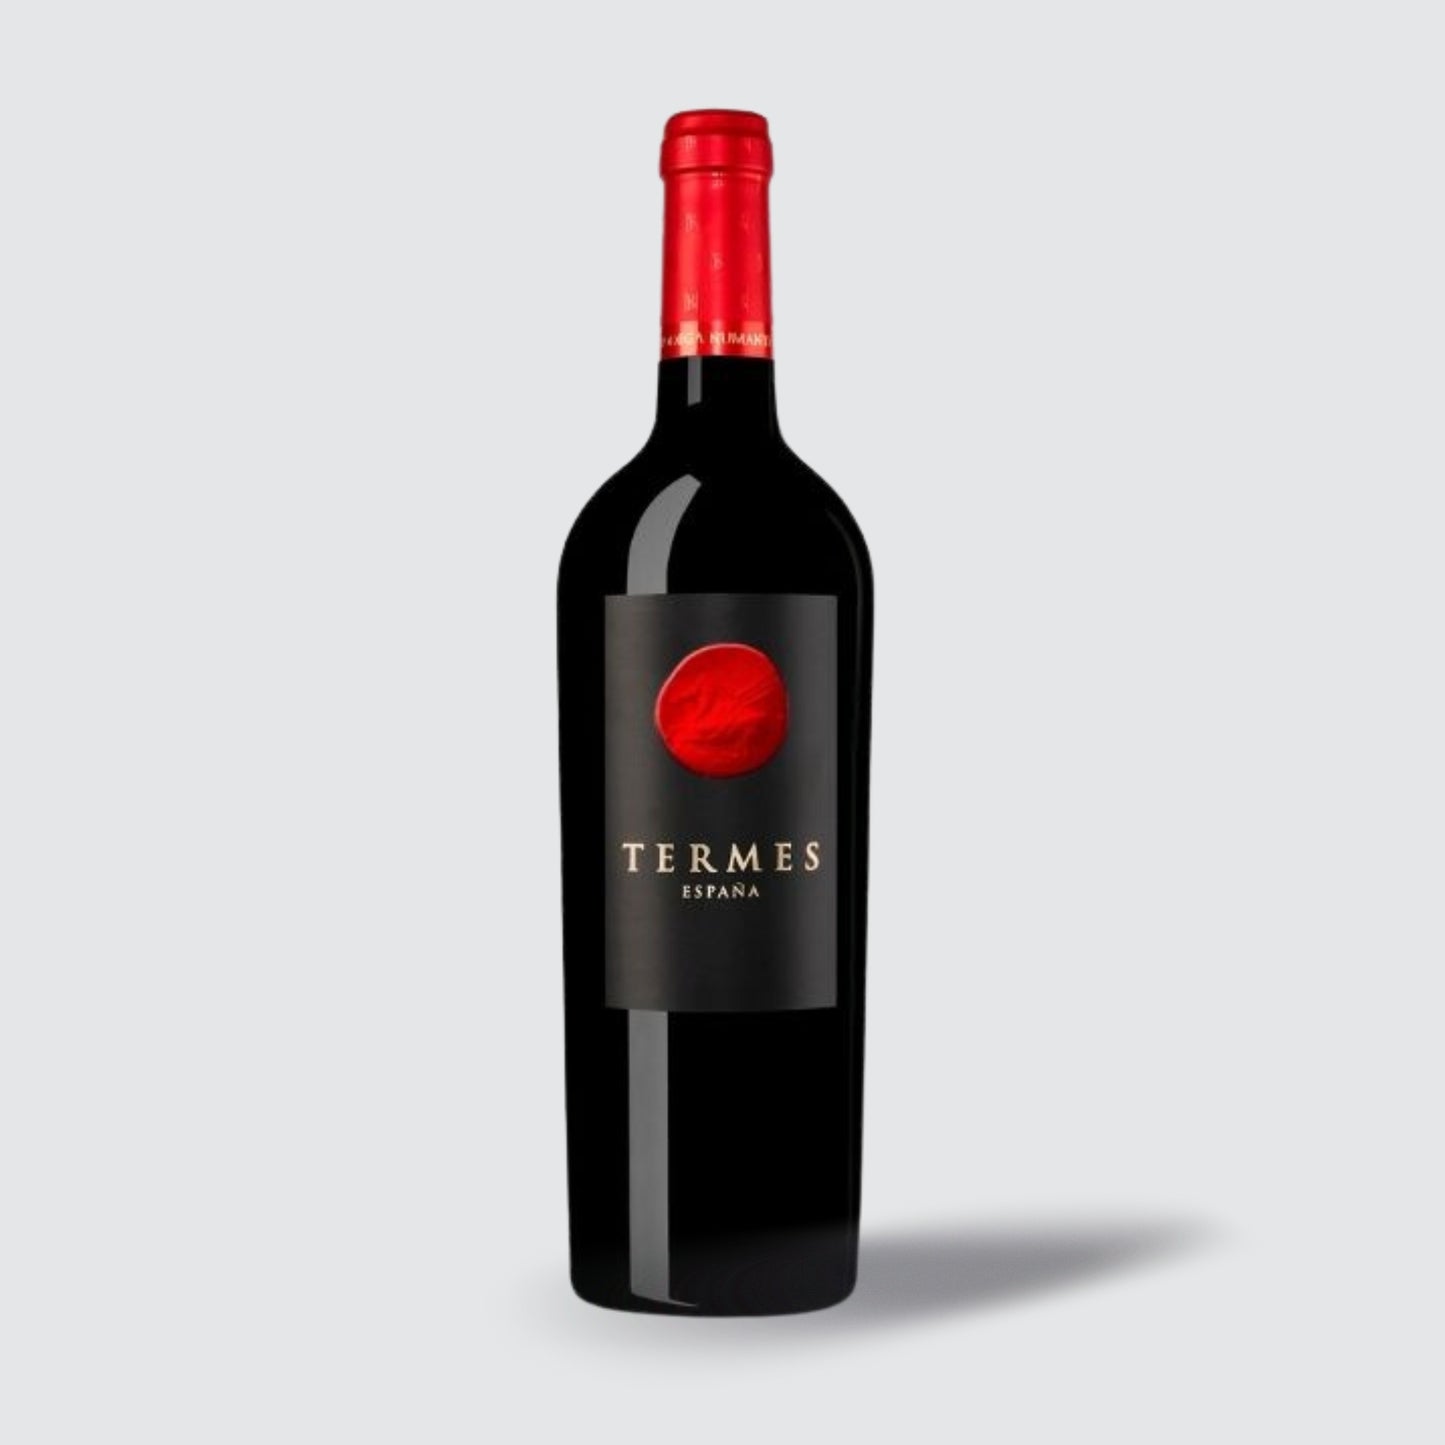 Bodegas Numanthia Termes Toro 2019 Red Wine